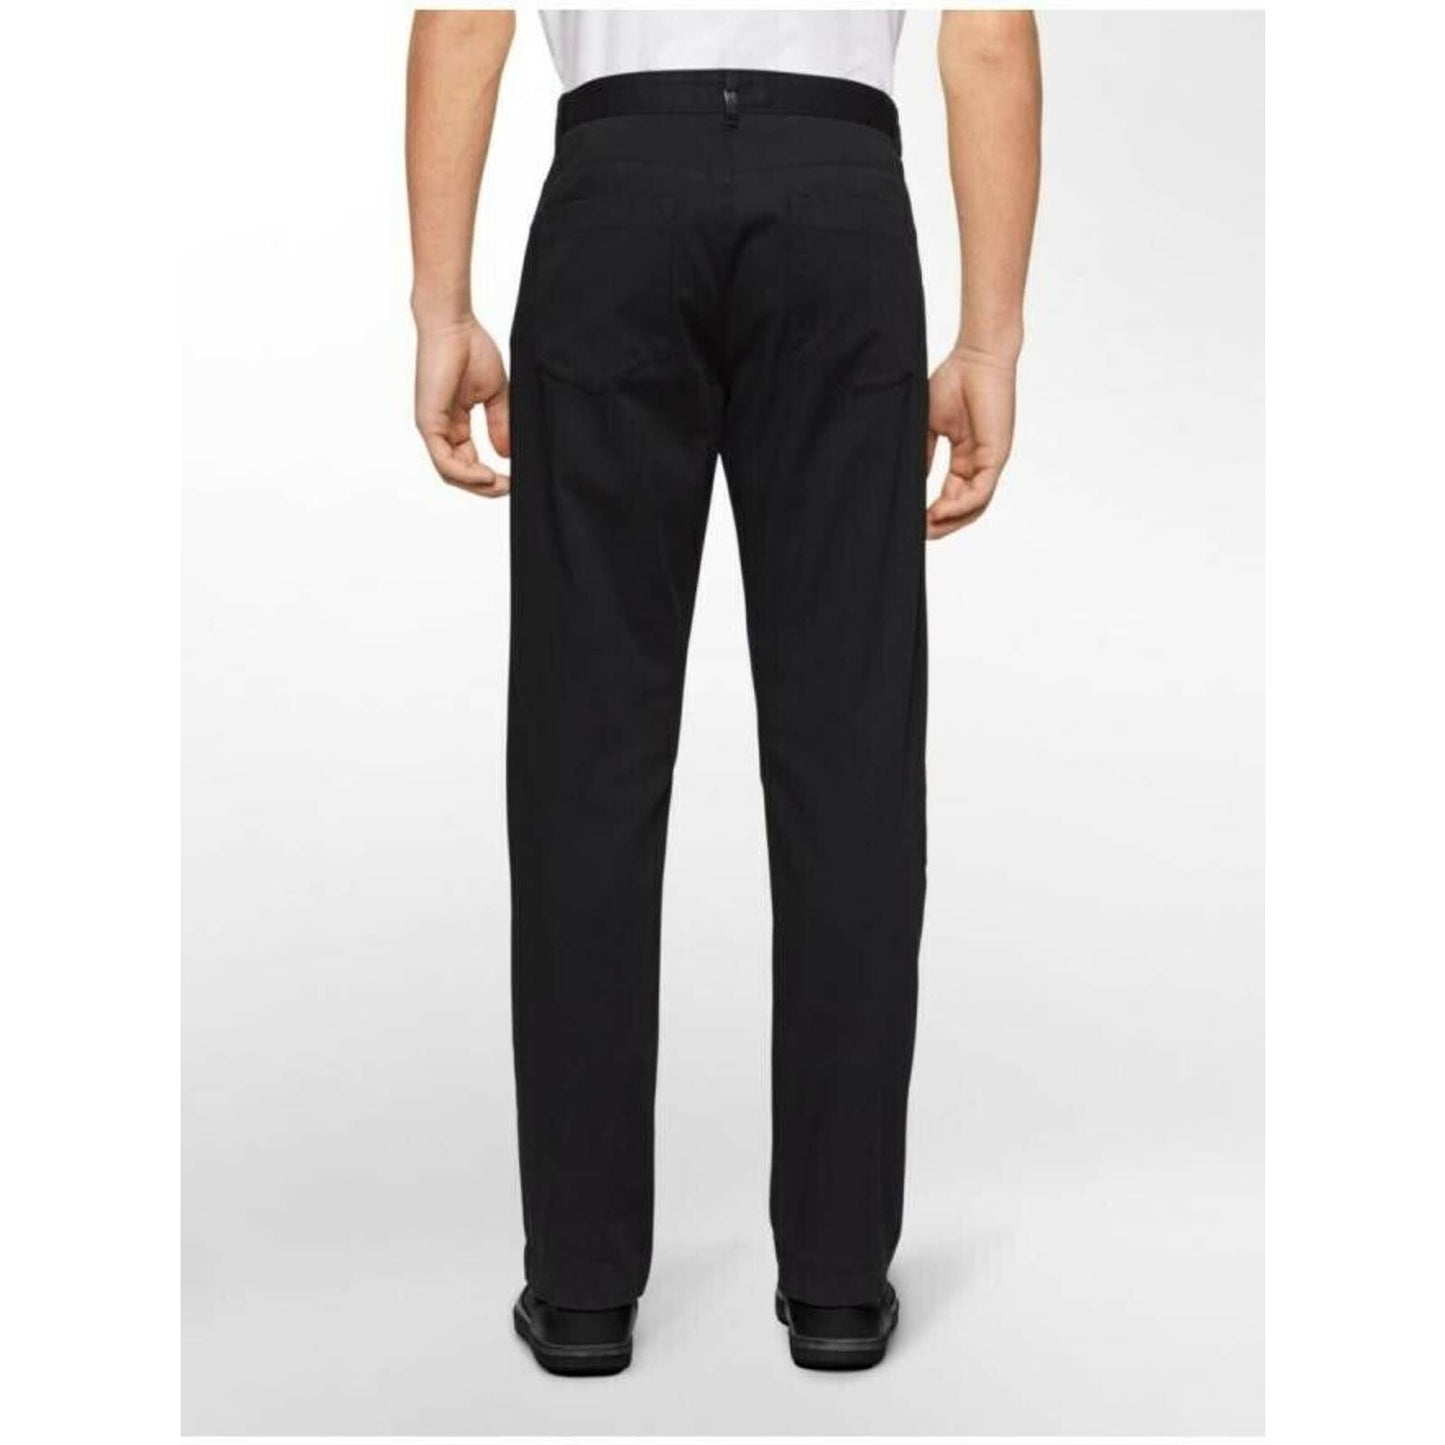 CALVIN KLEIN, Men's Calvary Black Signature Twill Pants, Size 36W 34L, NWT, $58